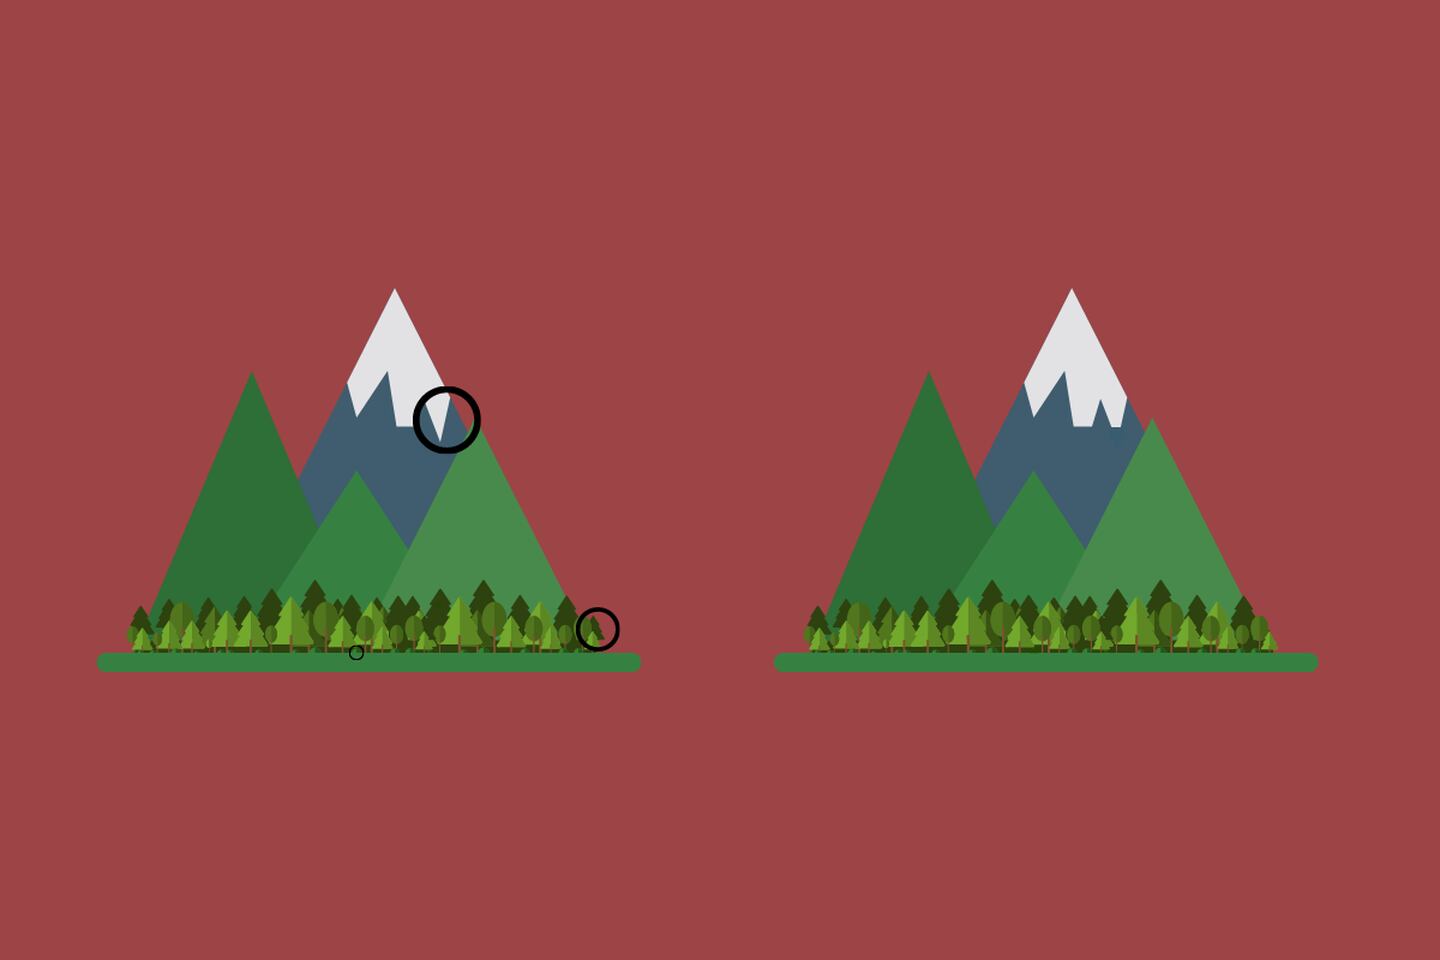 3 diferencias reveladas entre las dos montañas.